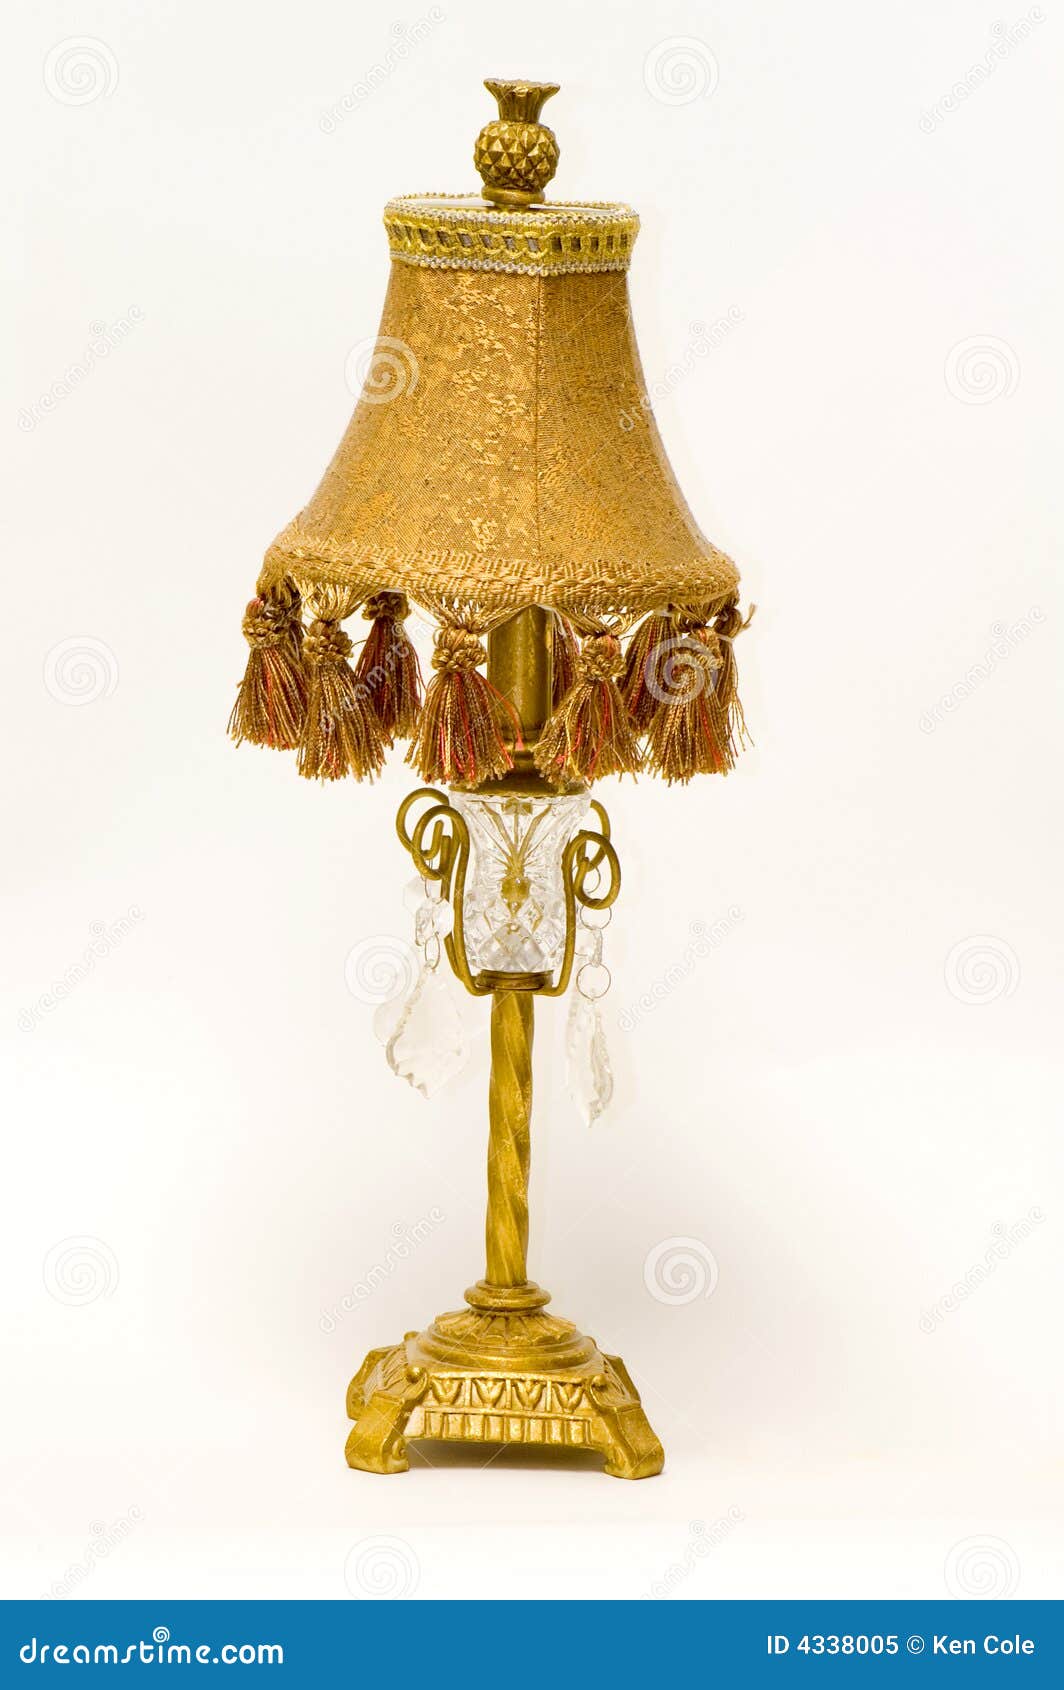 Antique Victorian Desk Lamp Stock Image Image Of Tassels Golden